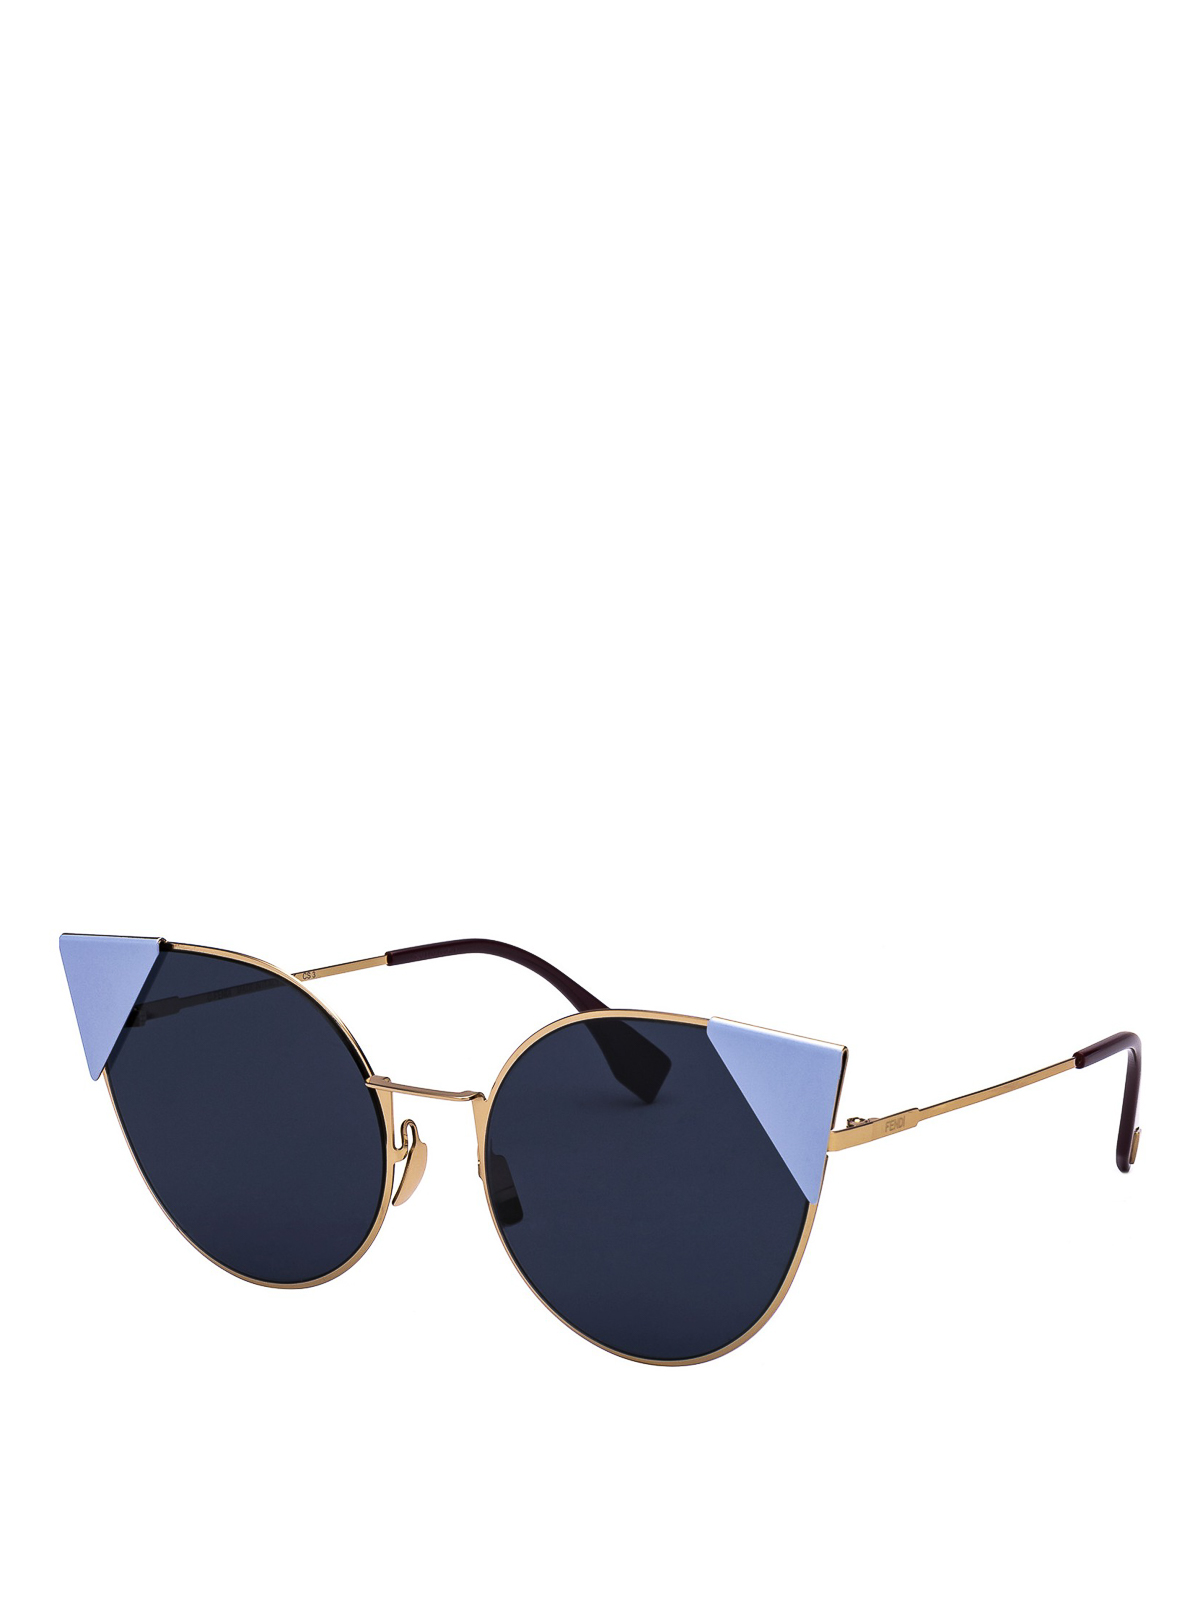 fendi blue sunglasses